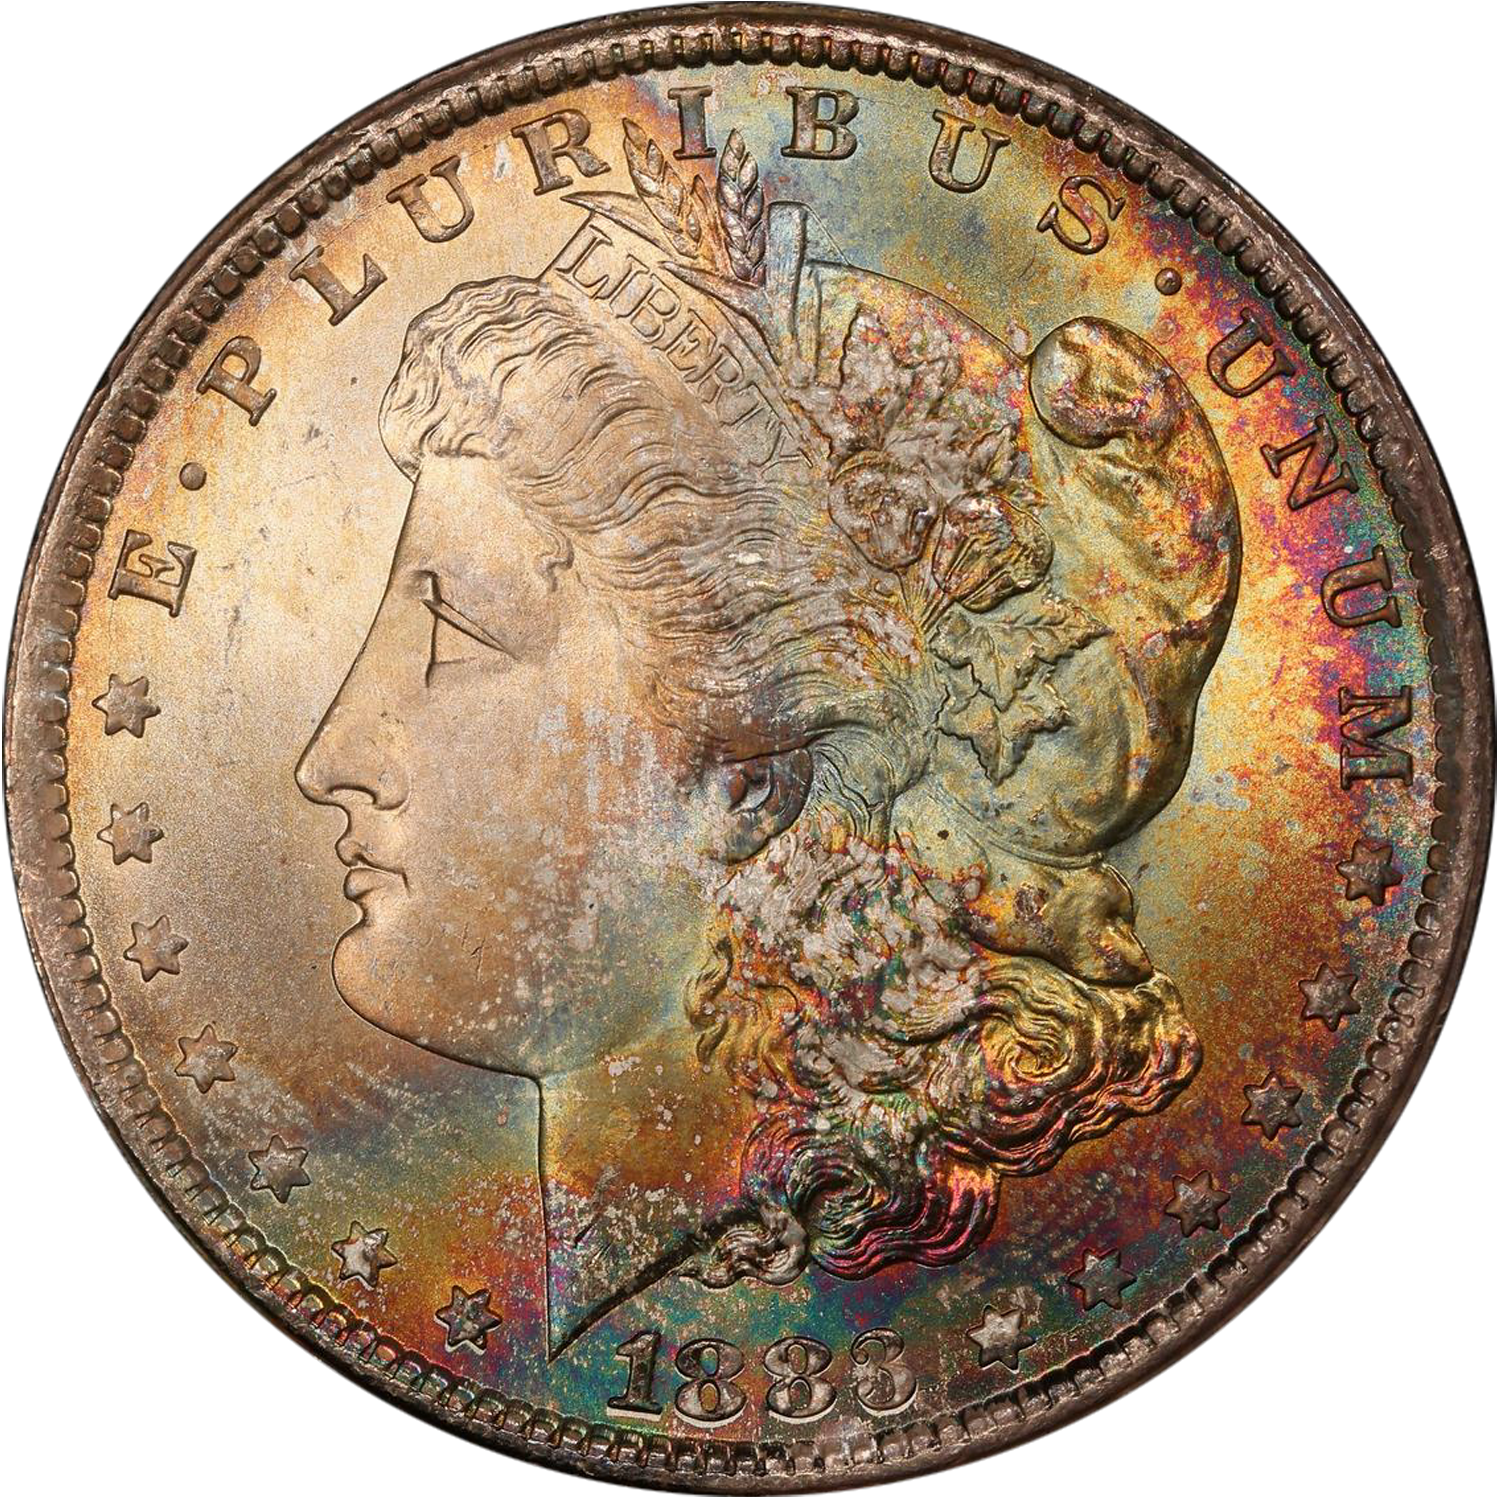 1883 cc gem mint state morgan dollar value guide